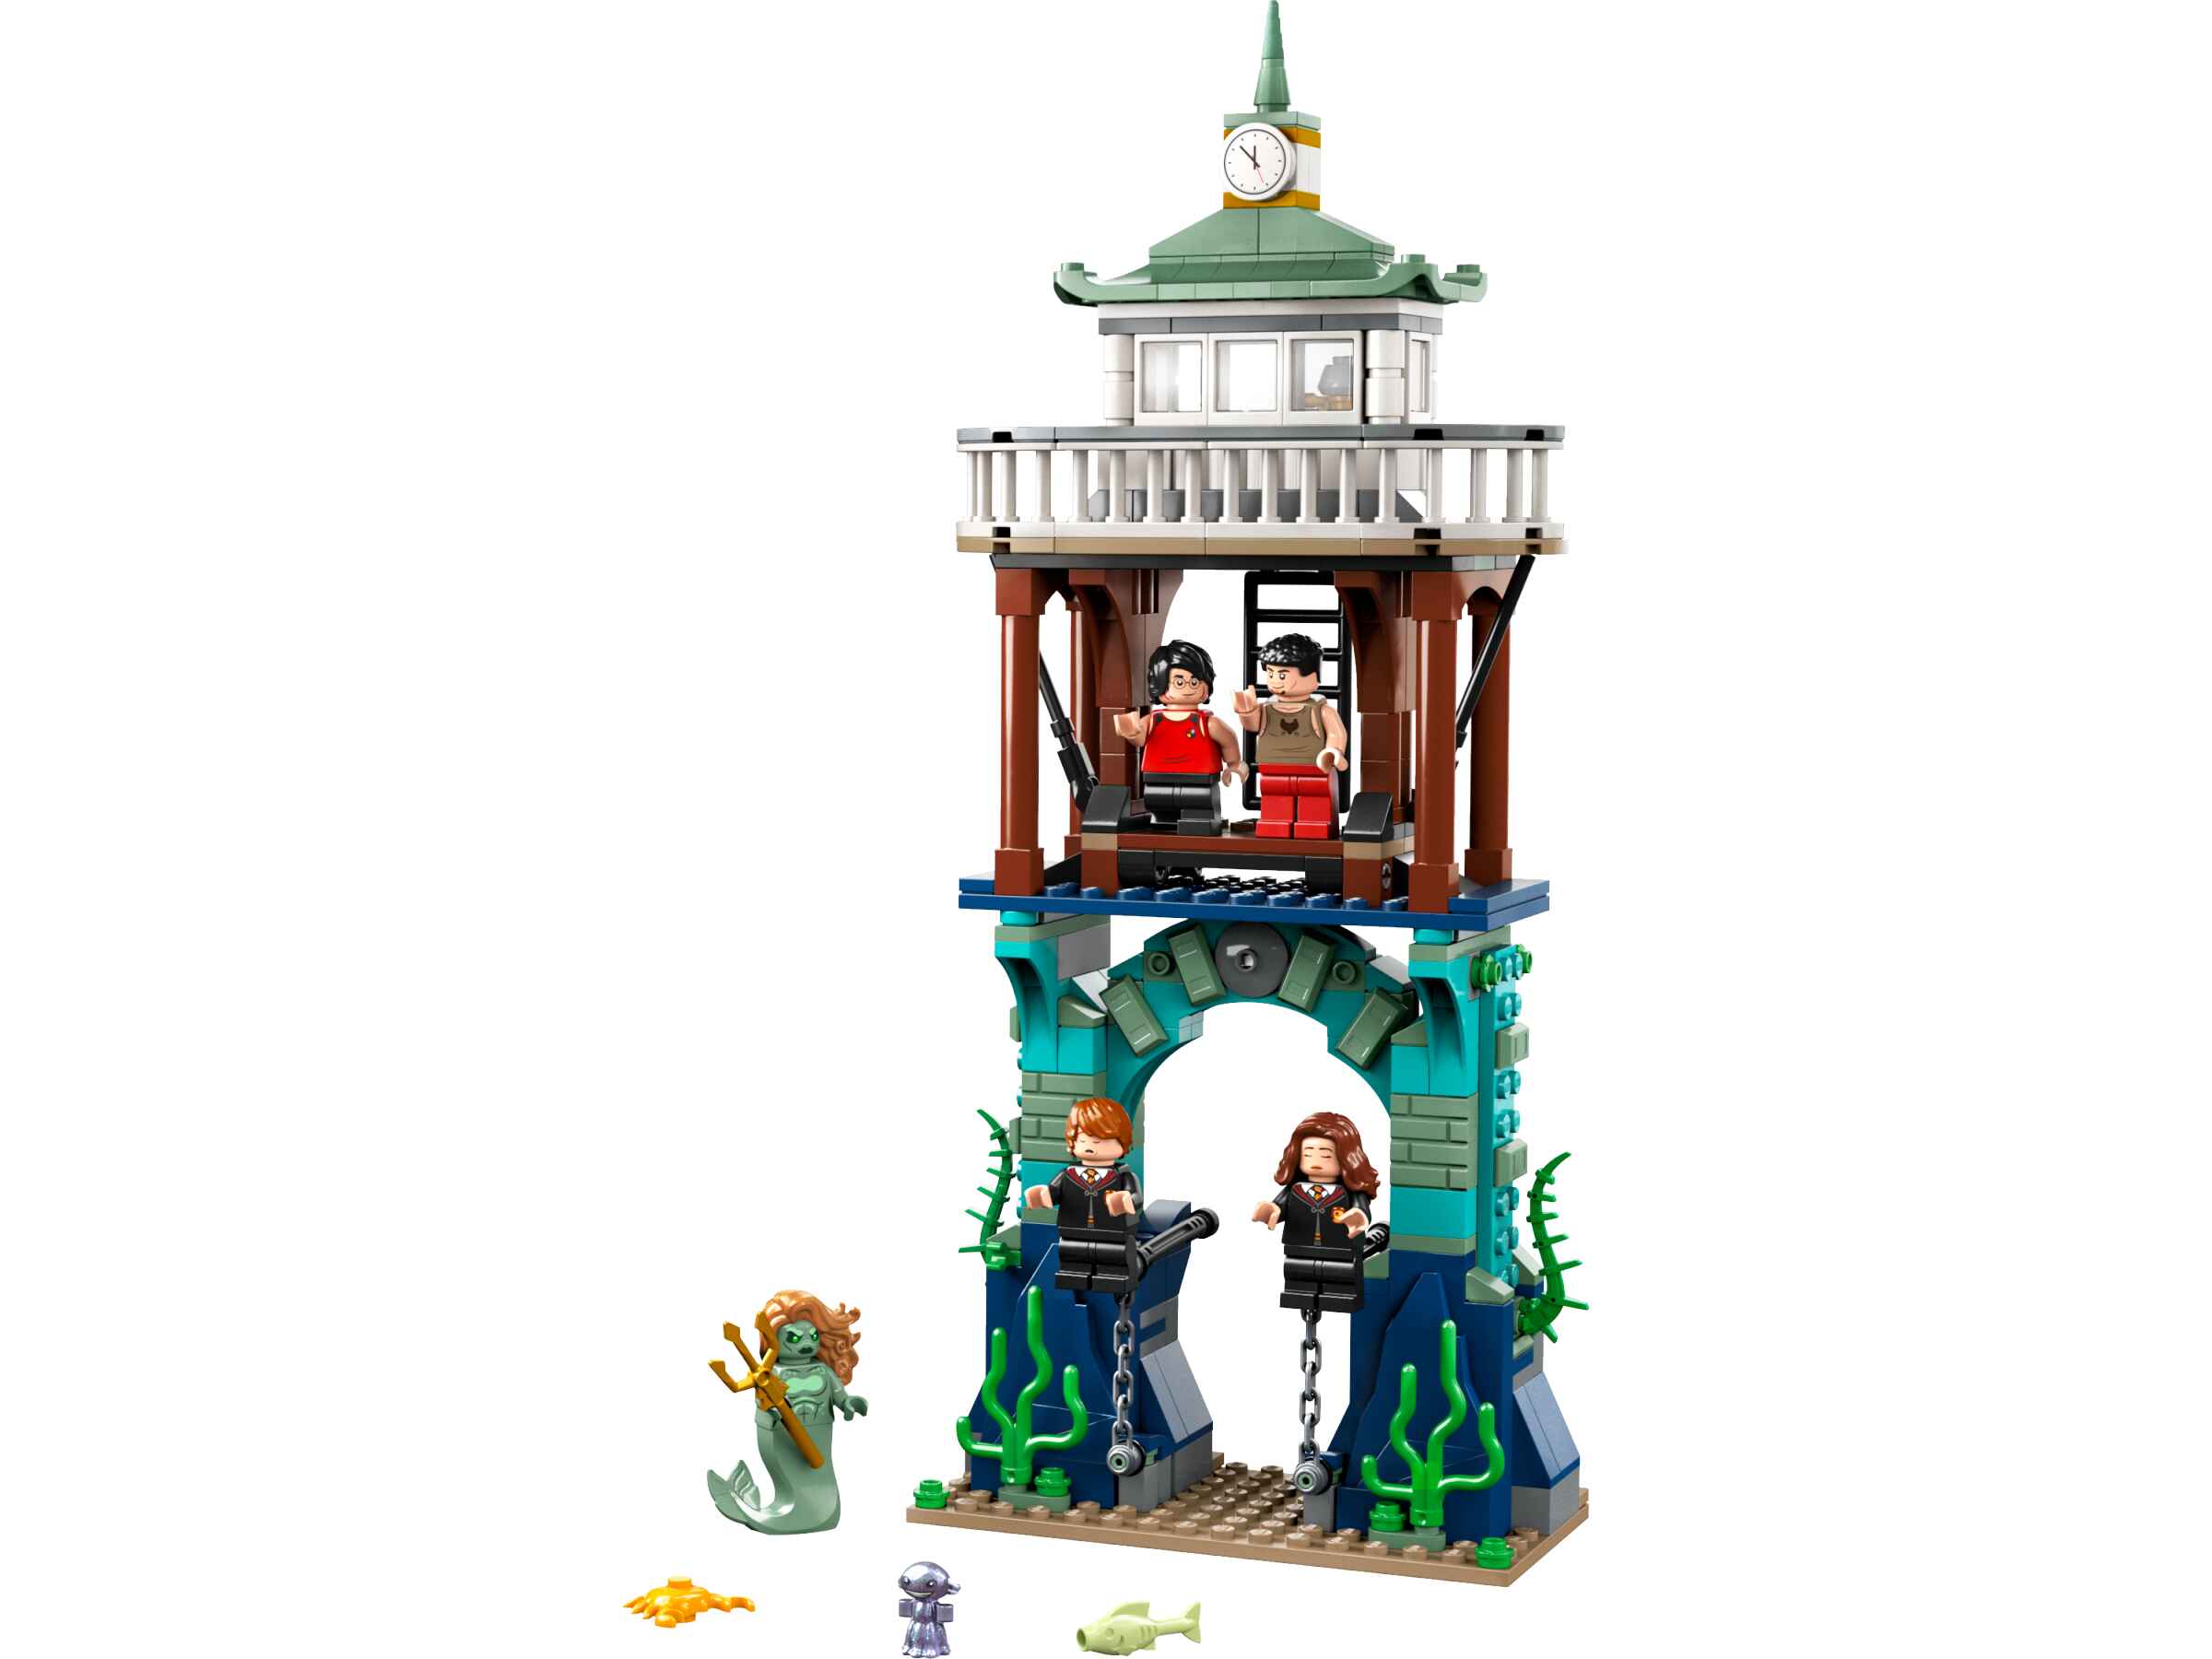 LEGO 76420 Harry Potter Trimagisches Turnier: Der Schwarze See, 7 Figuren